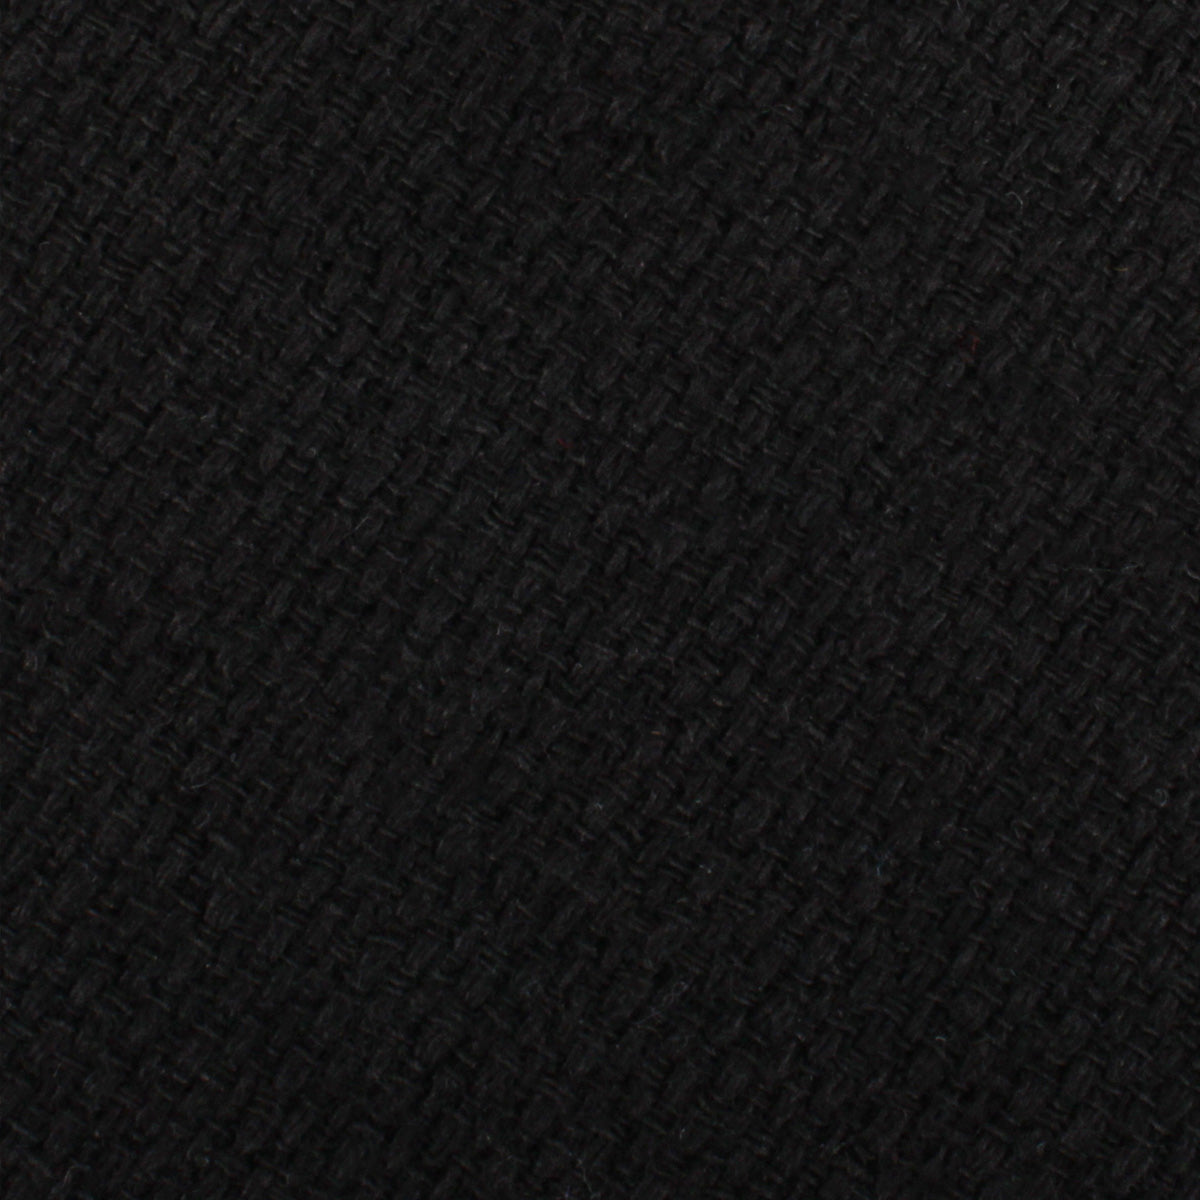 St Lucia Black Linen Pocket Square Fabric